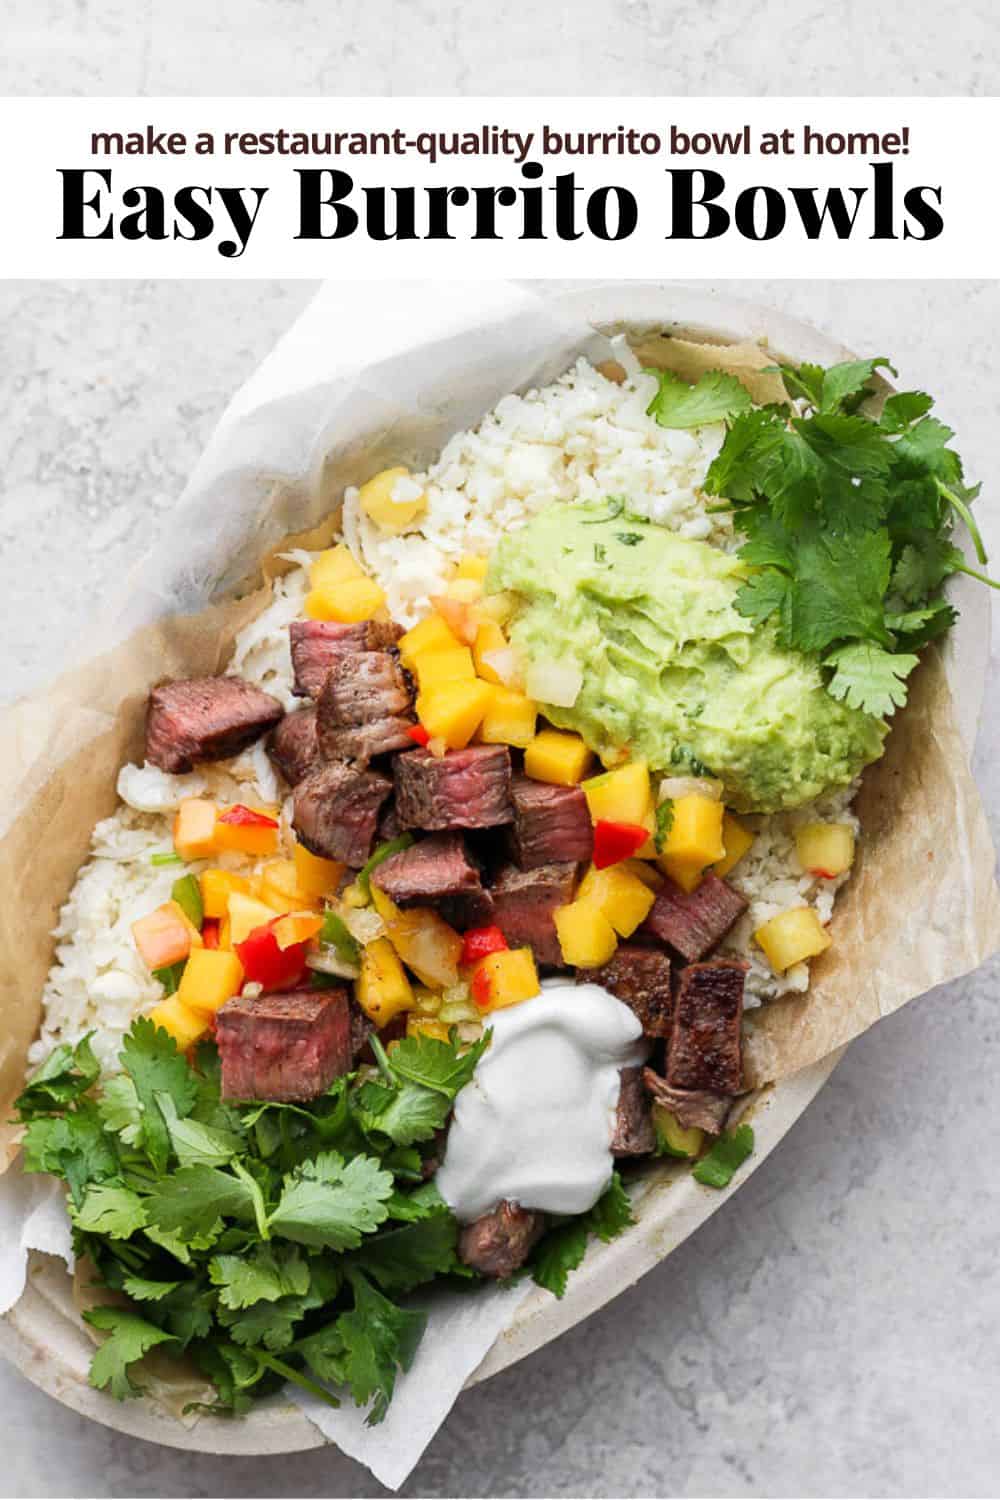 Pinterest image for burrito bowls.